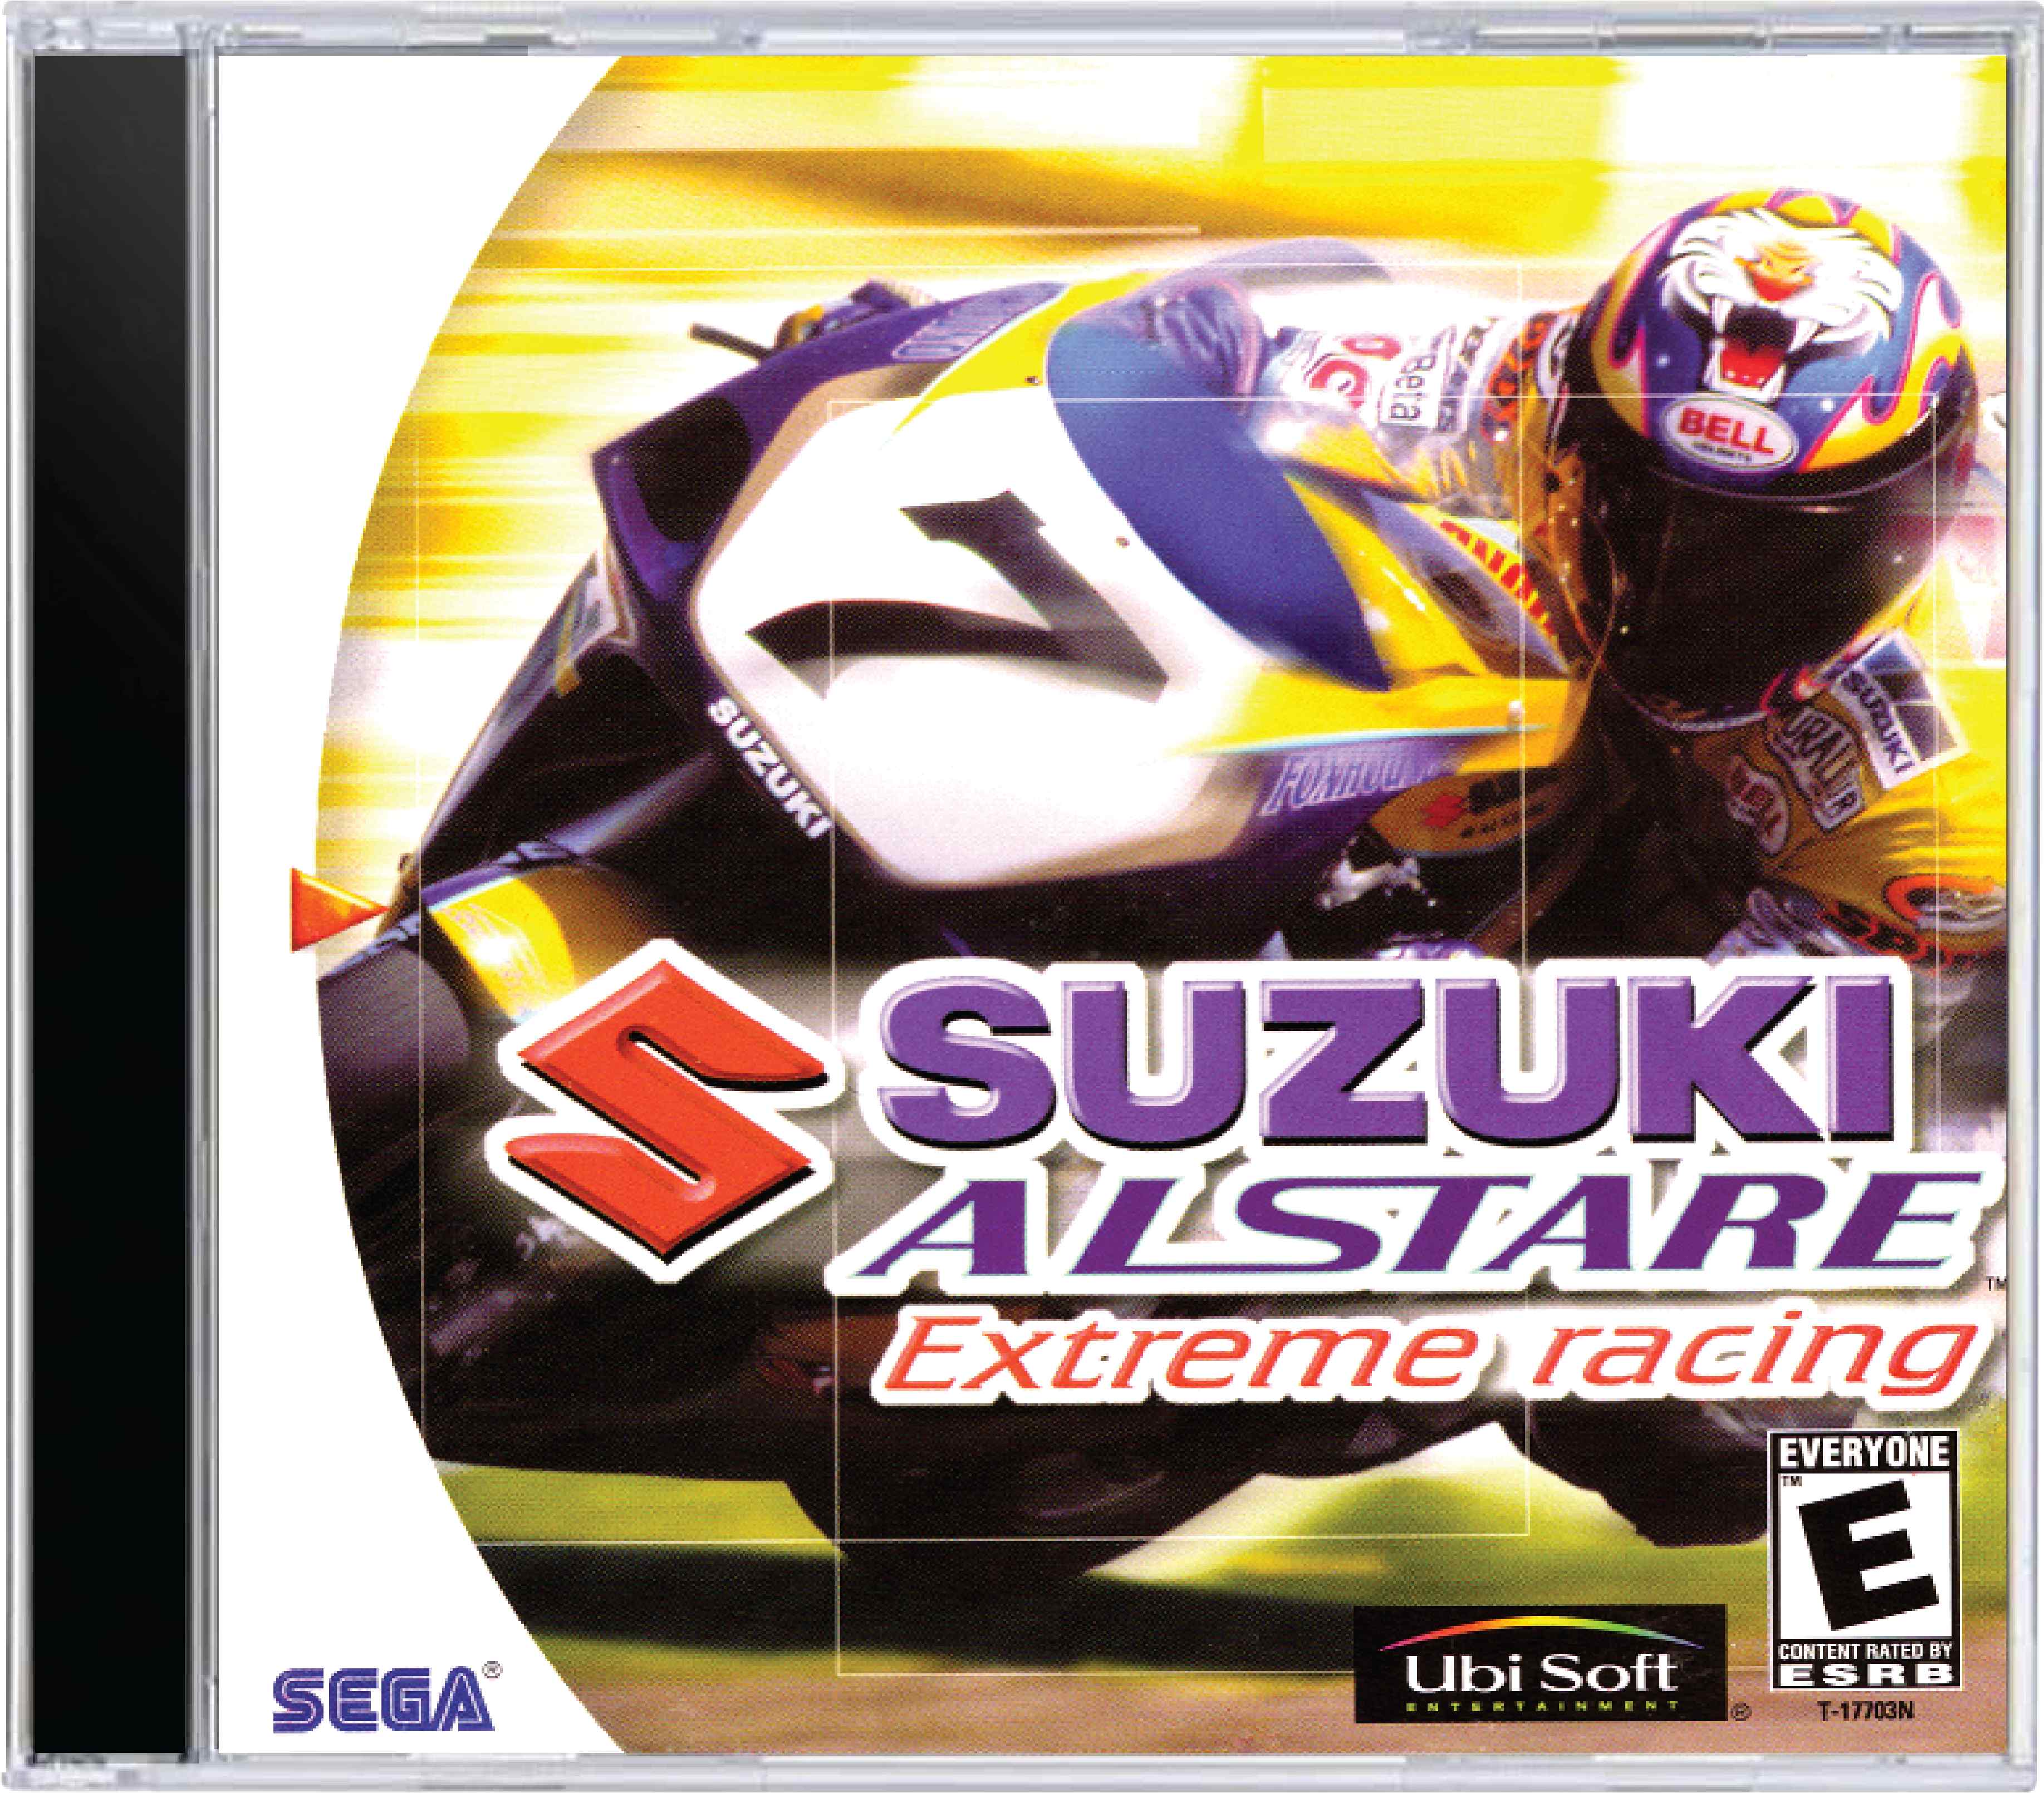 Suzuki Alstare Extreme Racing Cover Art